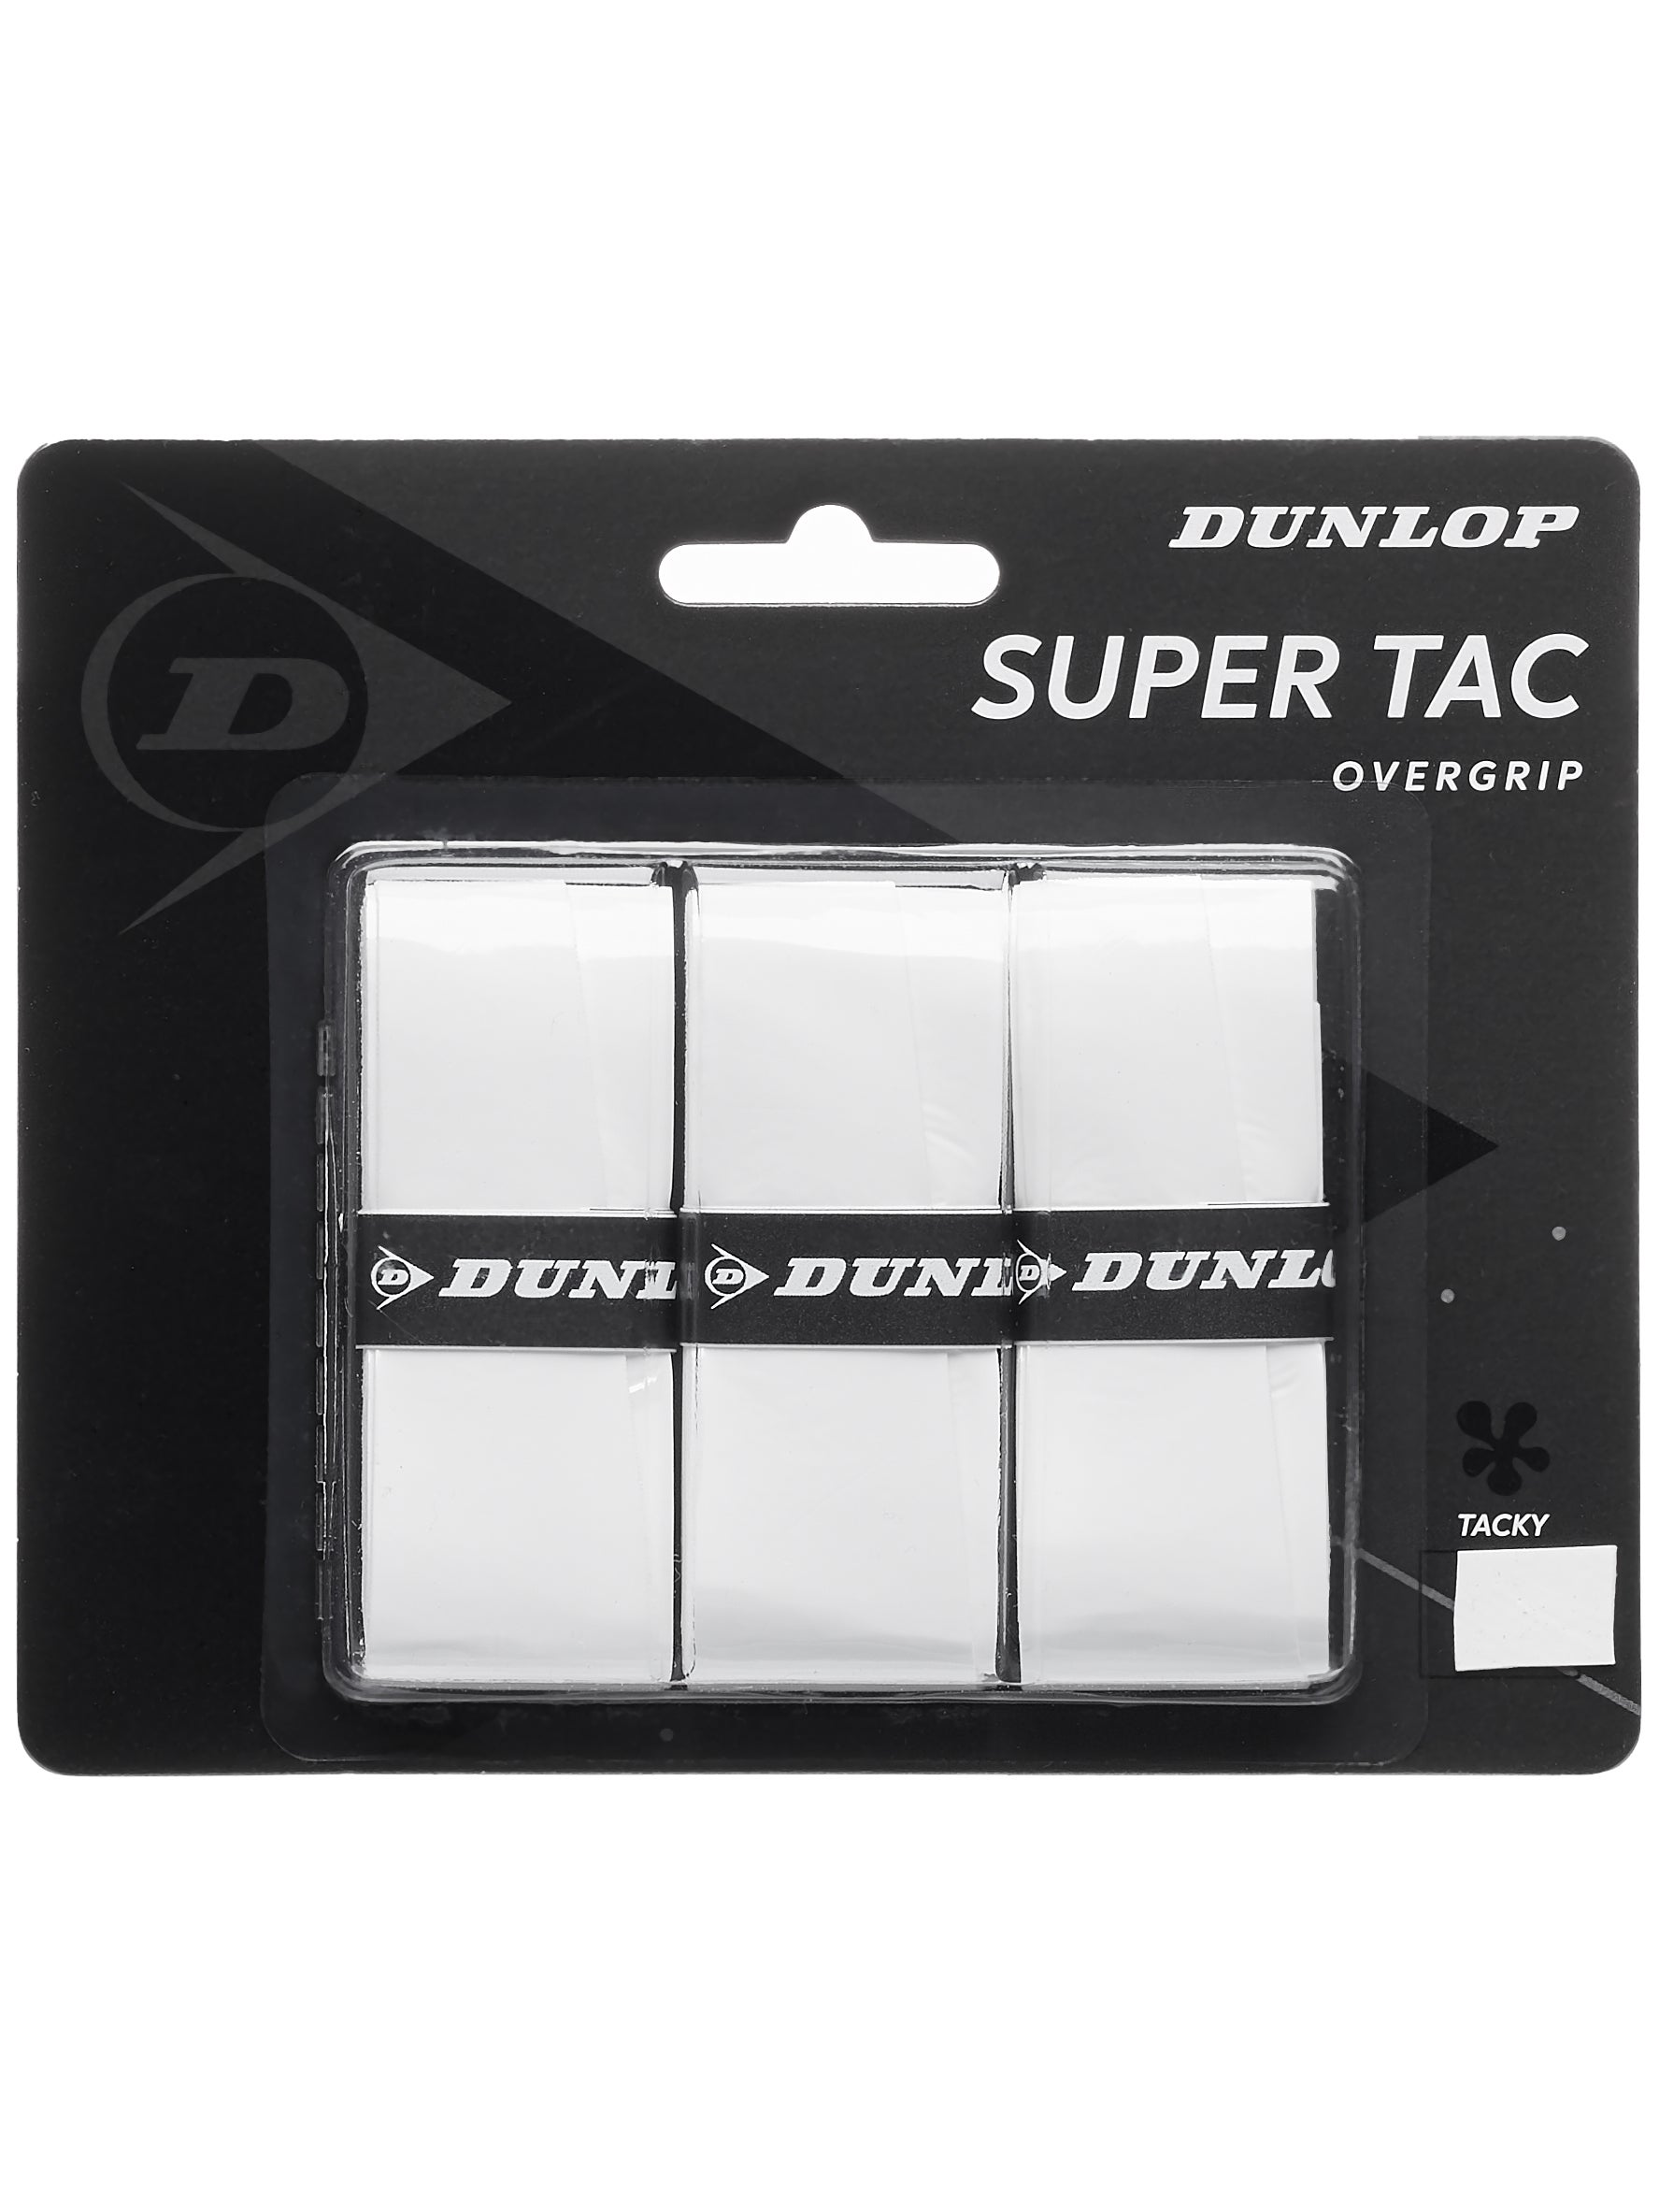 Dunlop Super Tac Overgrip 